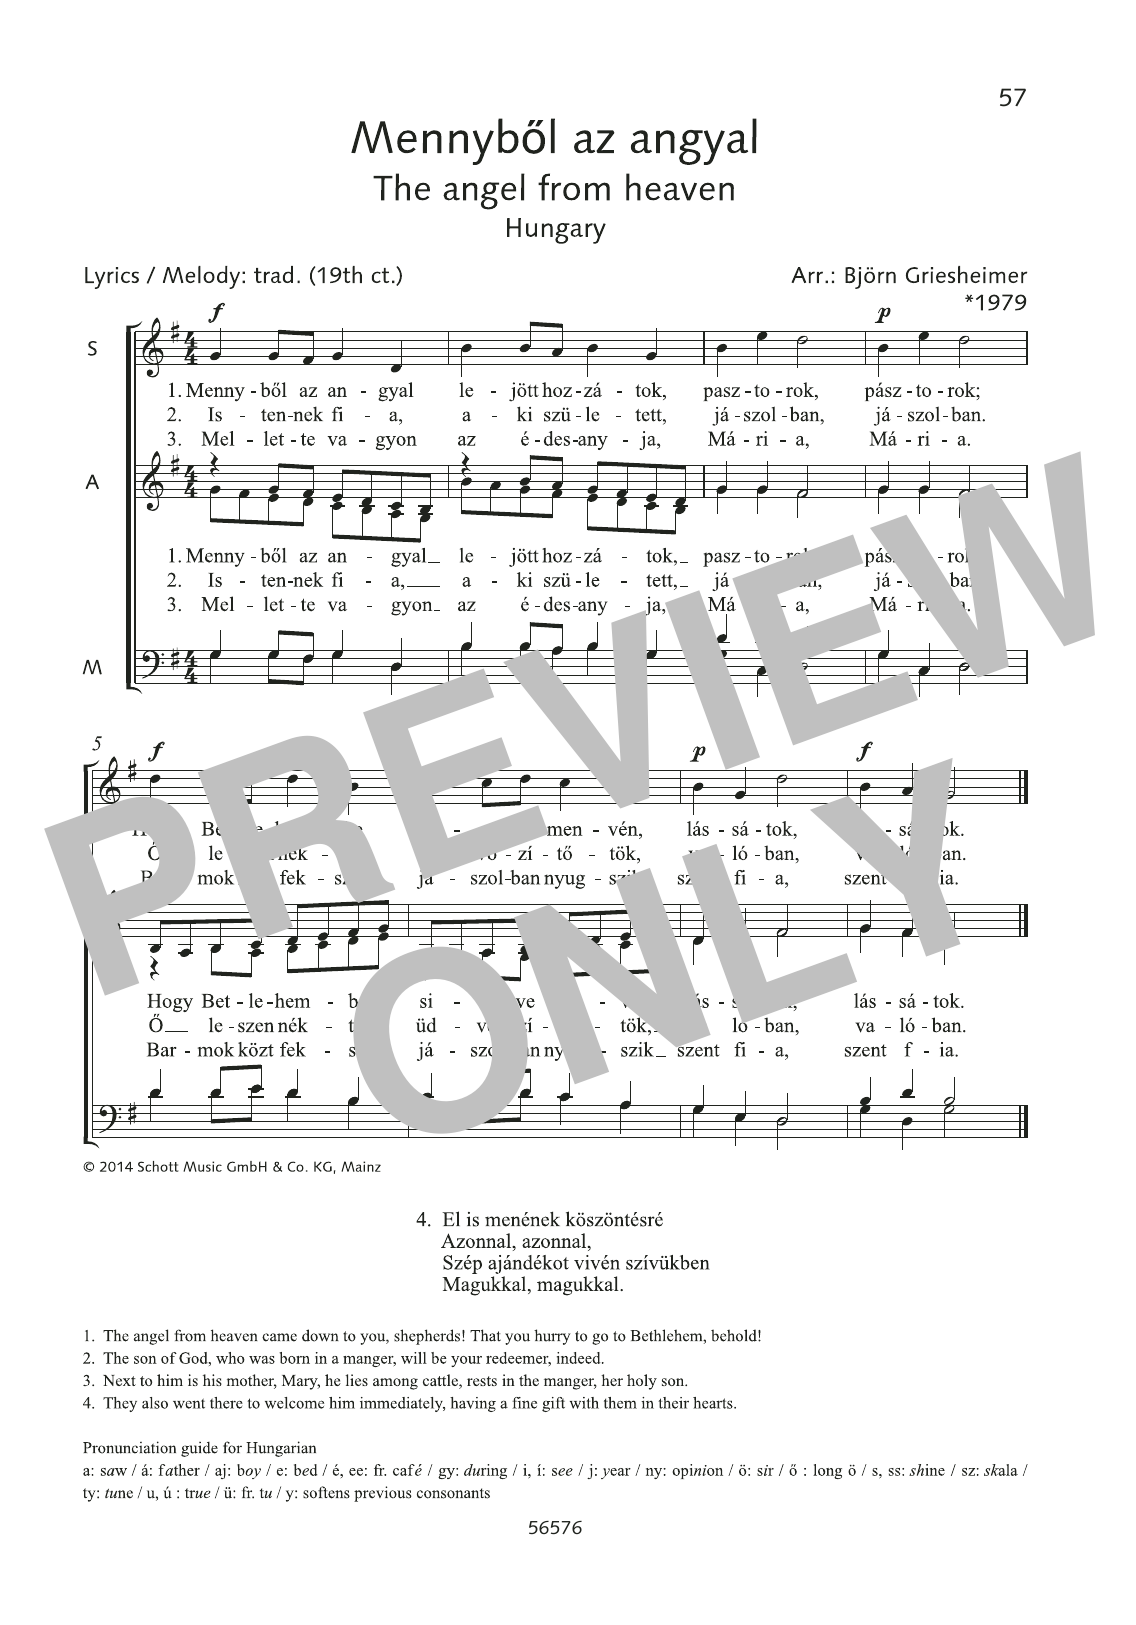 Björn Griesheimer Mennybol az angyal Sheet Music Notes & Chords for Choral - Download or Print PDF